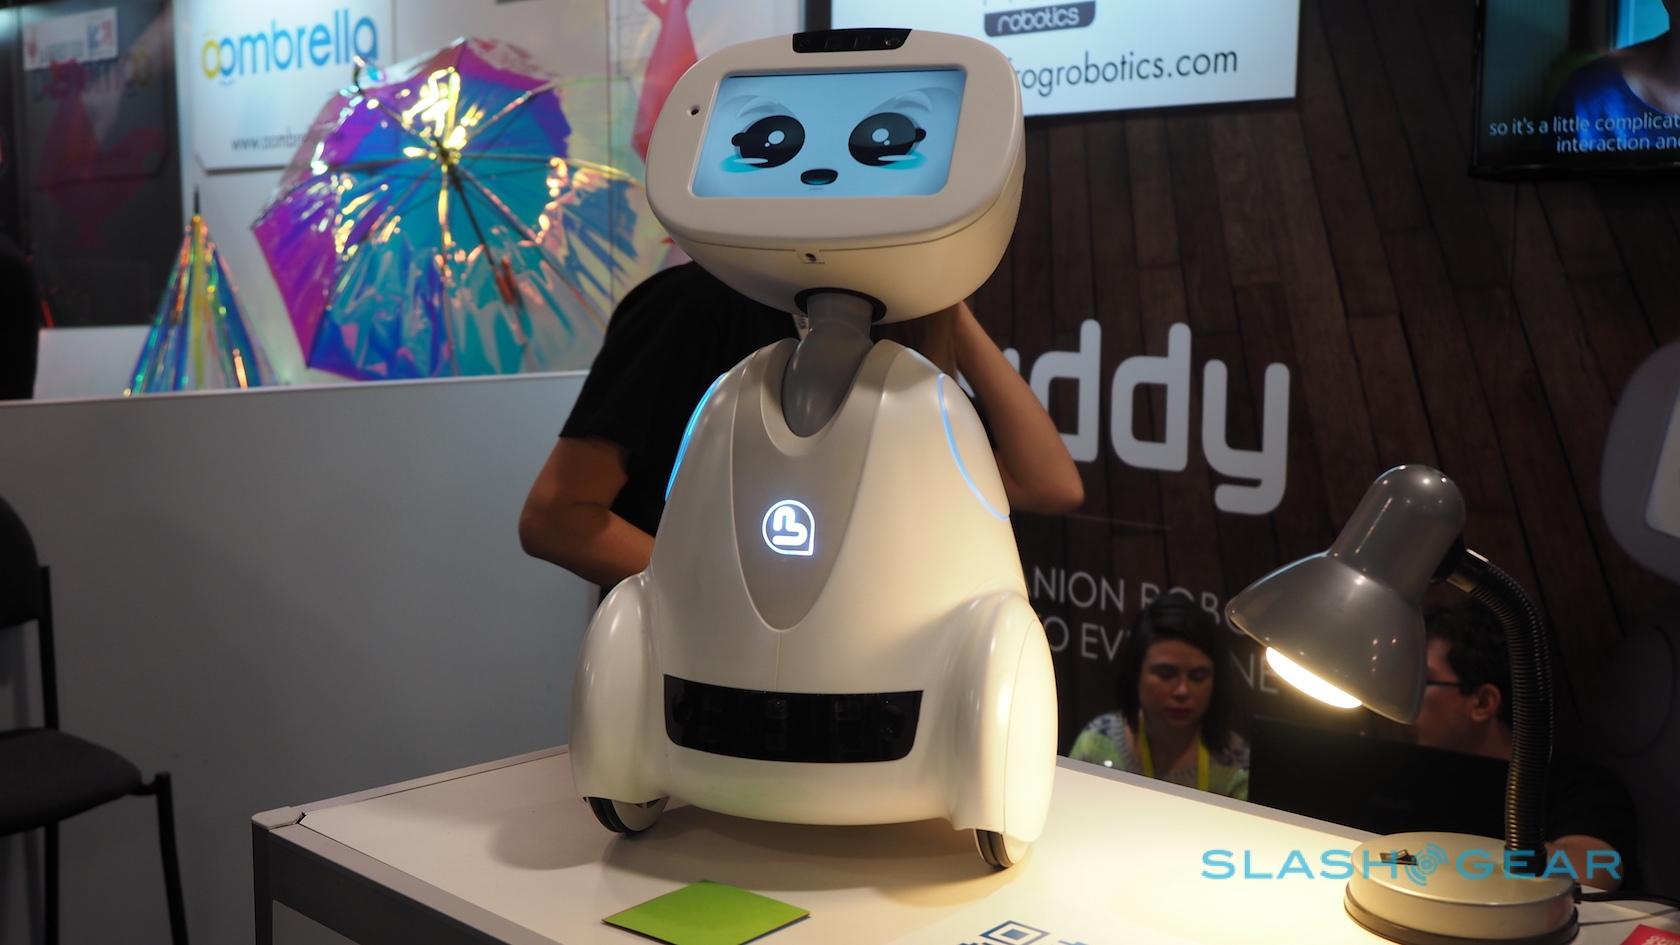 download buddy robot video engadget